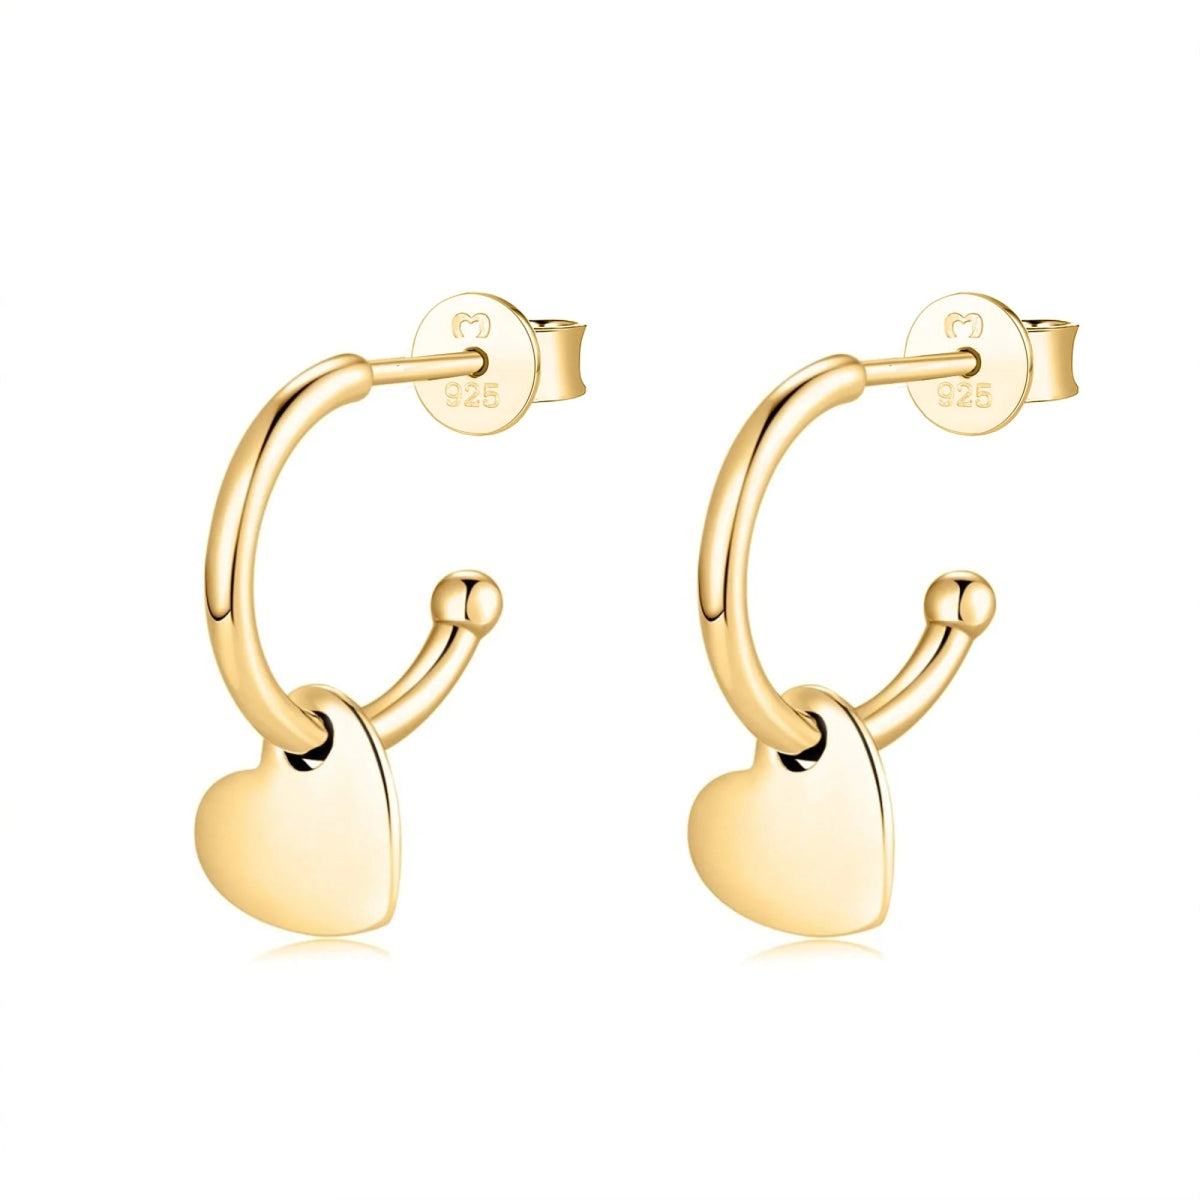 "Half Ring Hearts" Earrings - Milas Jewels Shop